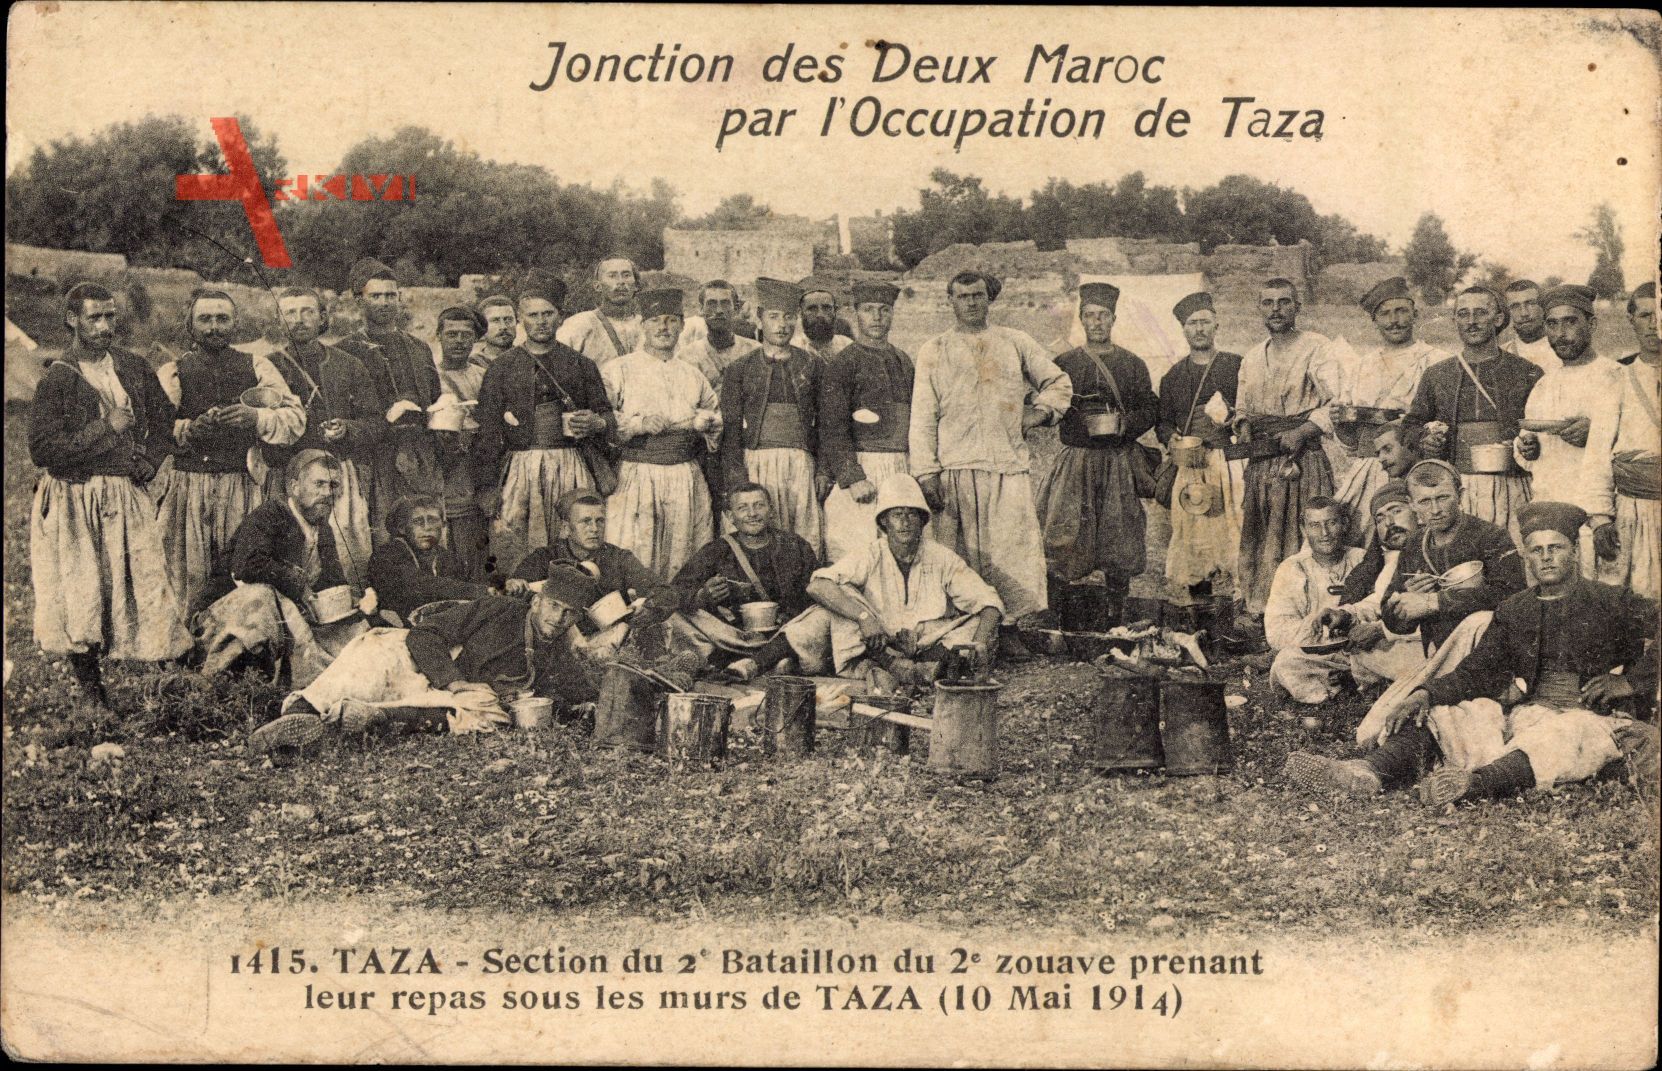 Taza Marokko, Section du 2e Bataillon du 2e Zouave, 10 Mai 1914